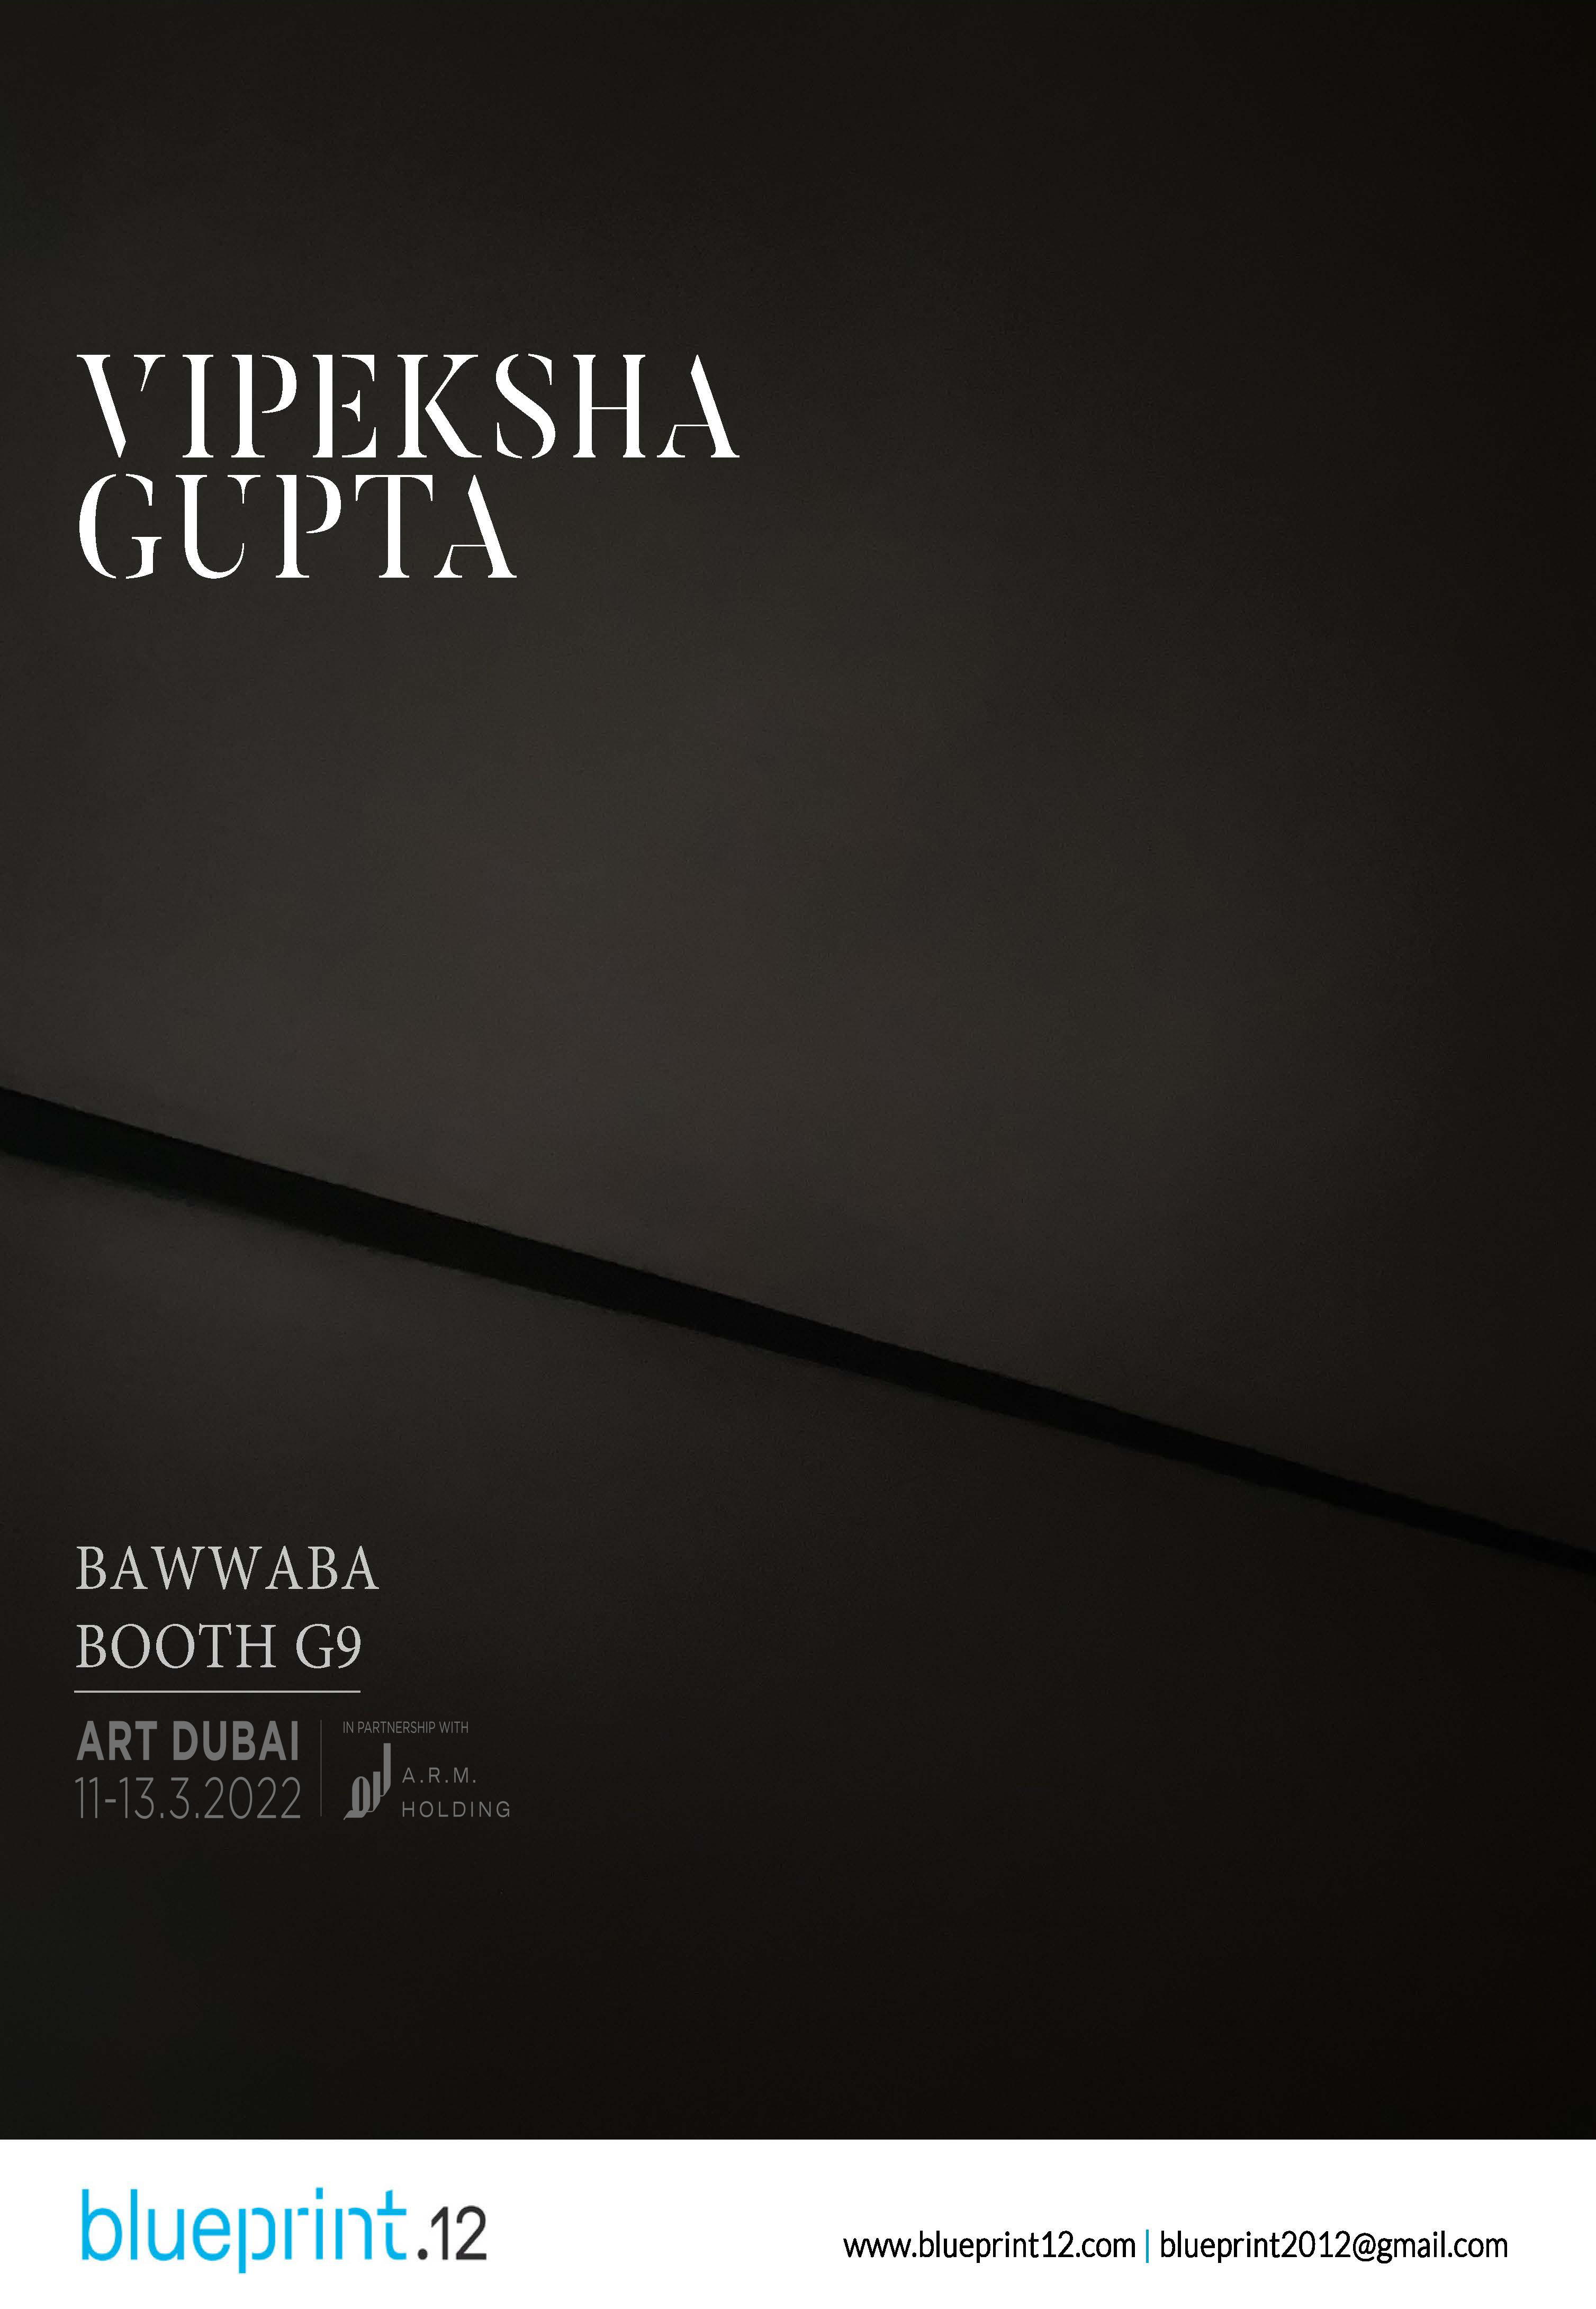 Art Dubai, South Asia artist, Blueprint12, Vipeksha Gupta